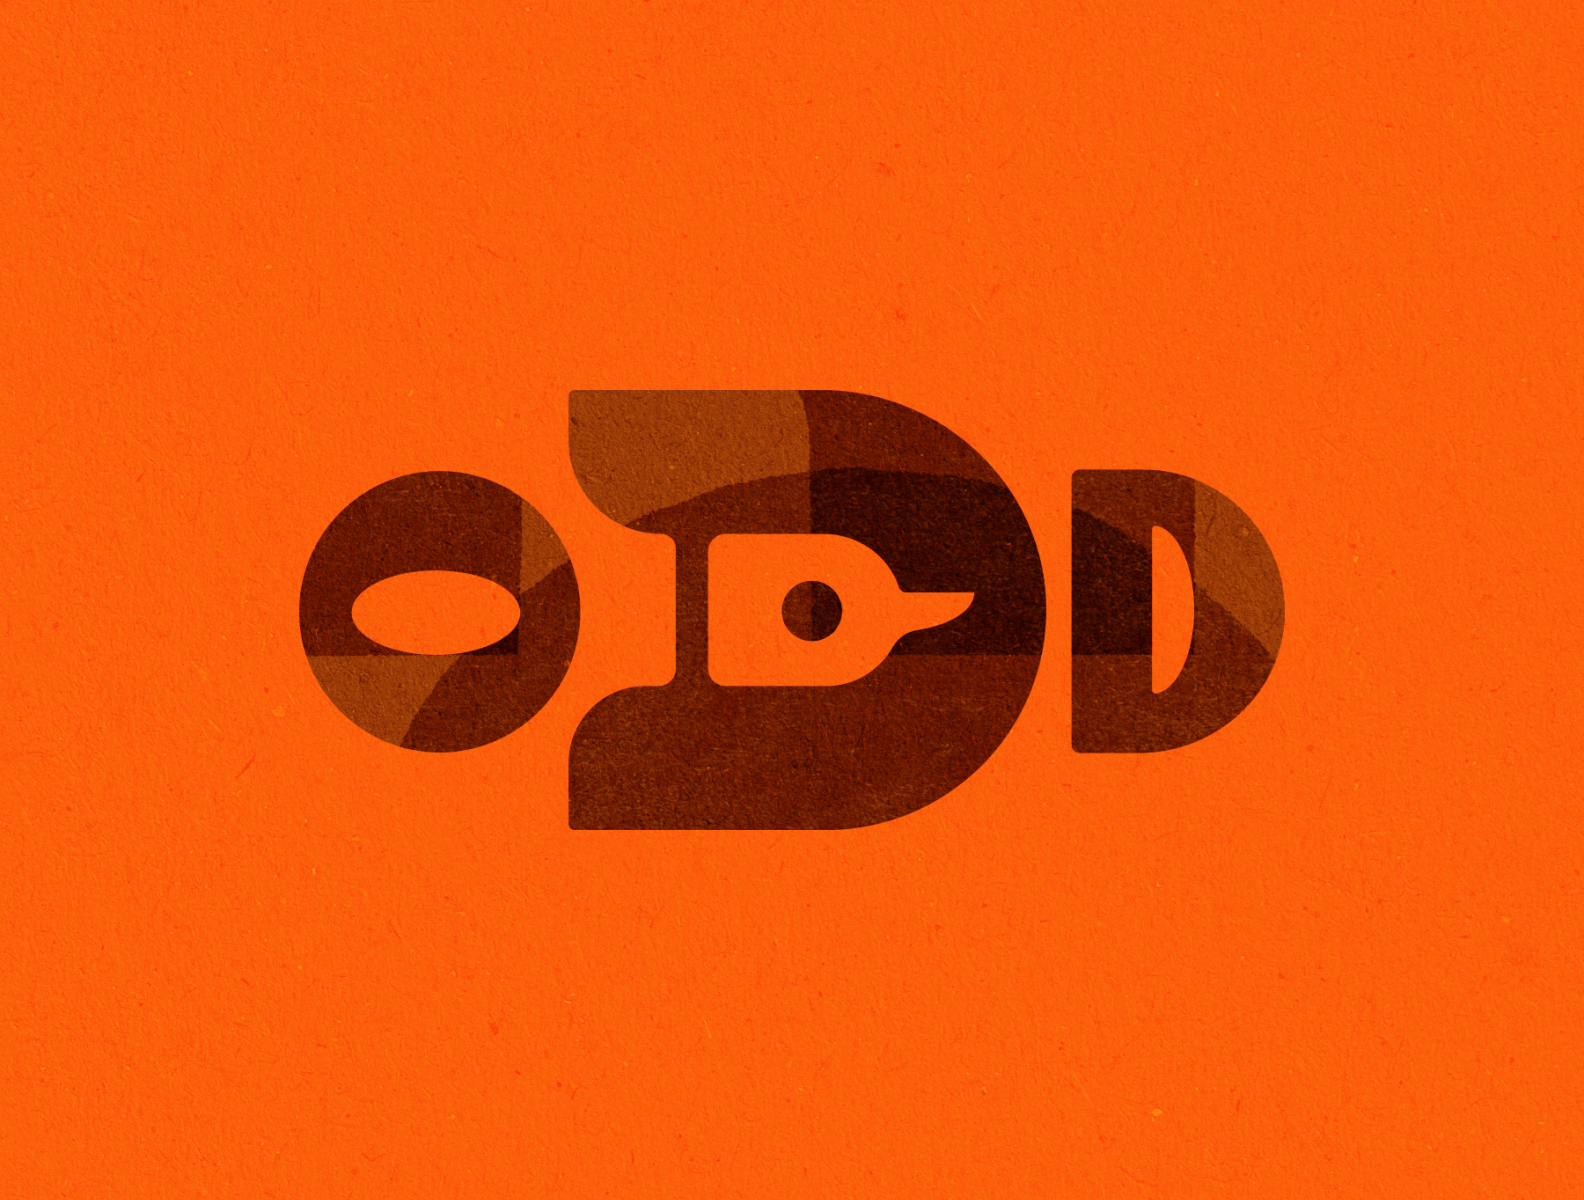 Odd Duck Logo by PUSH iQ on Dribbble